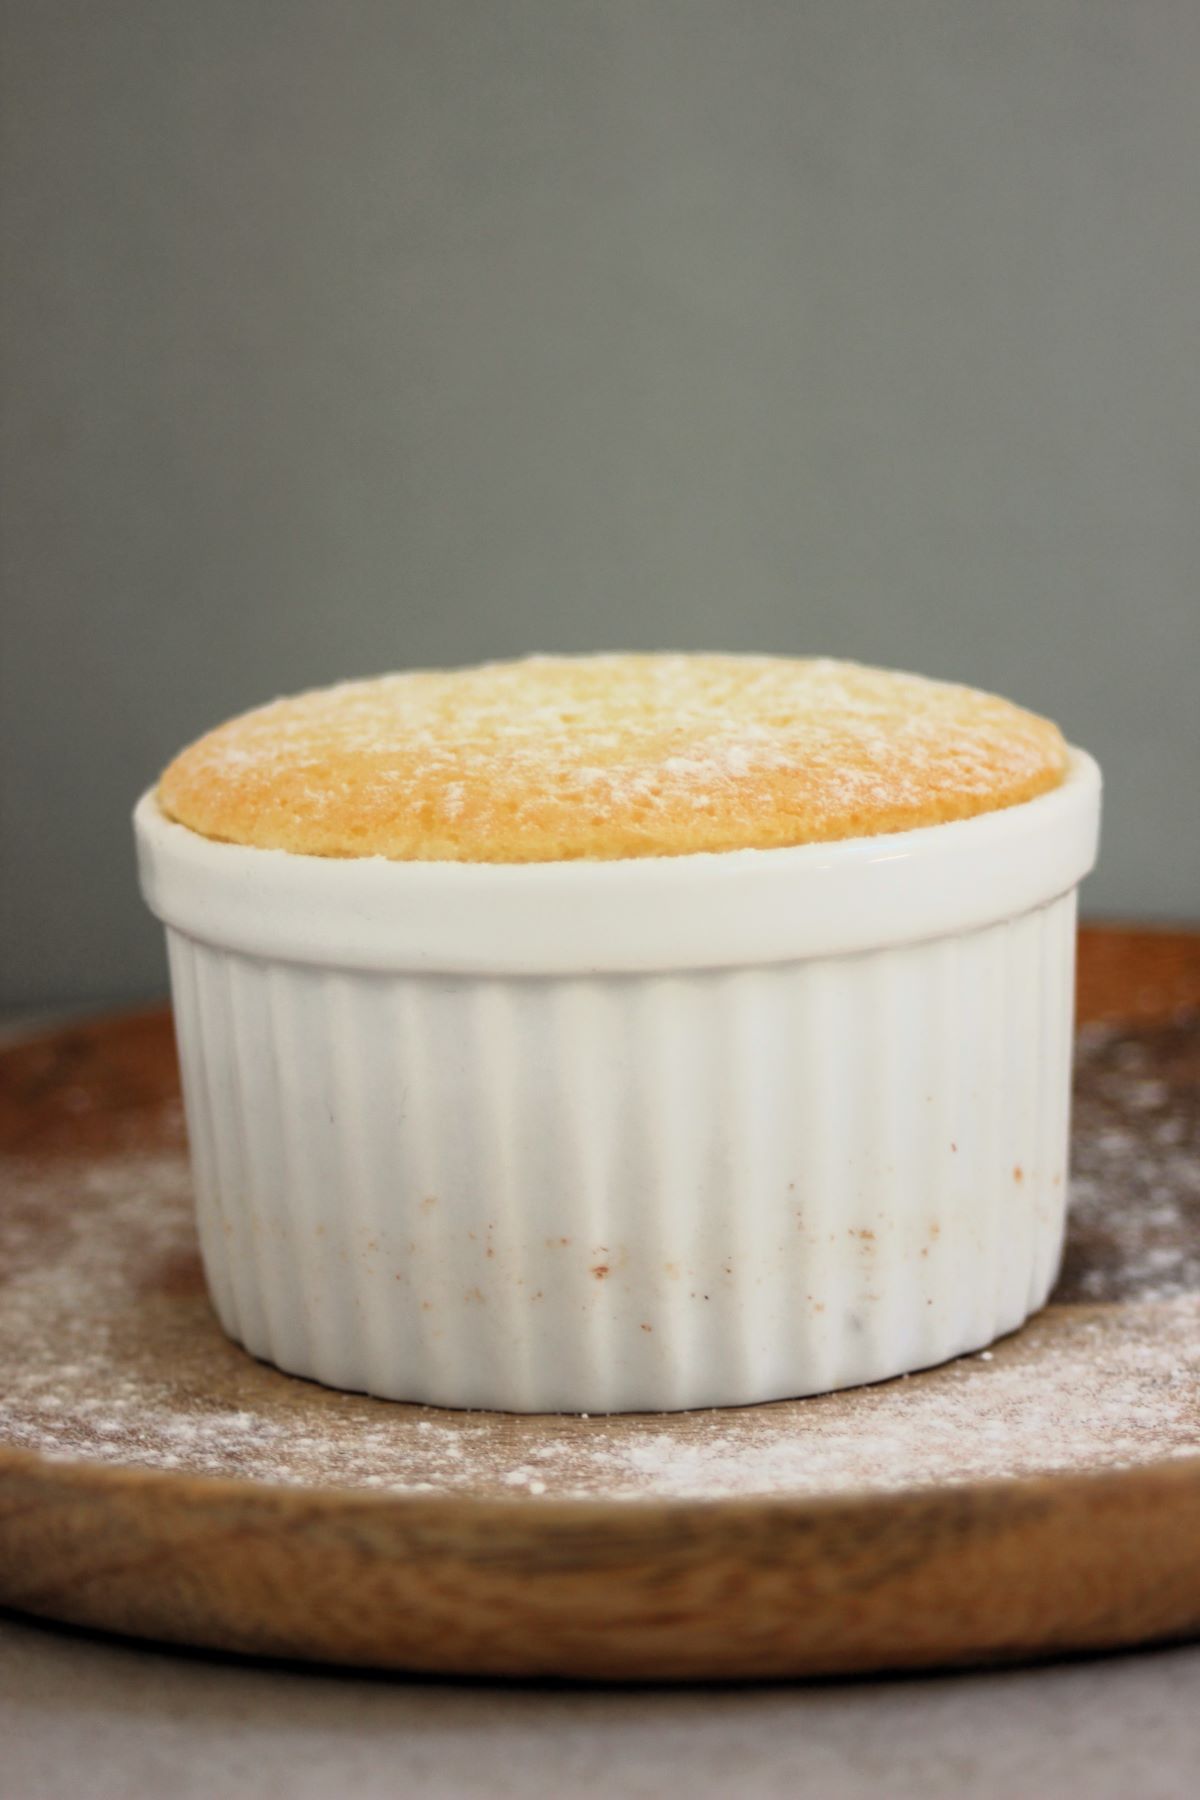 White ramekin with lemon pudding cake on a wooden plate.